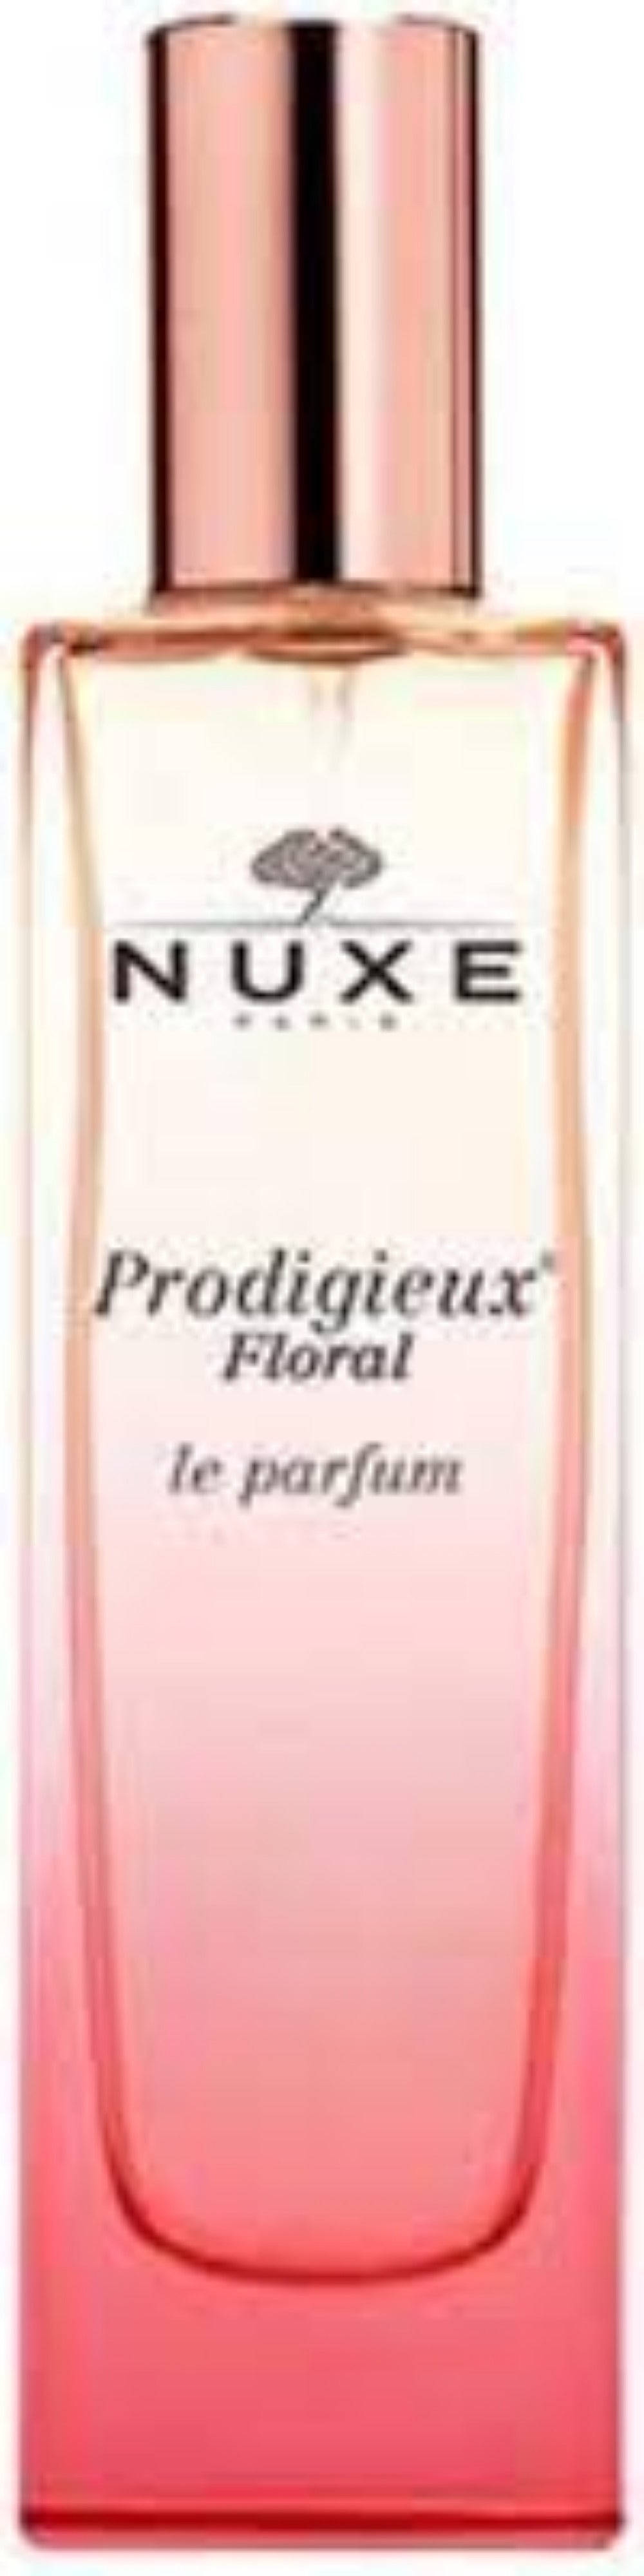 Nuxe Prodigieux Floral - 50 ml